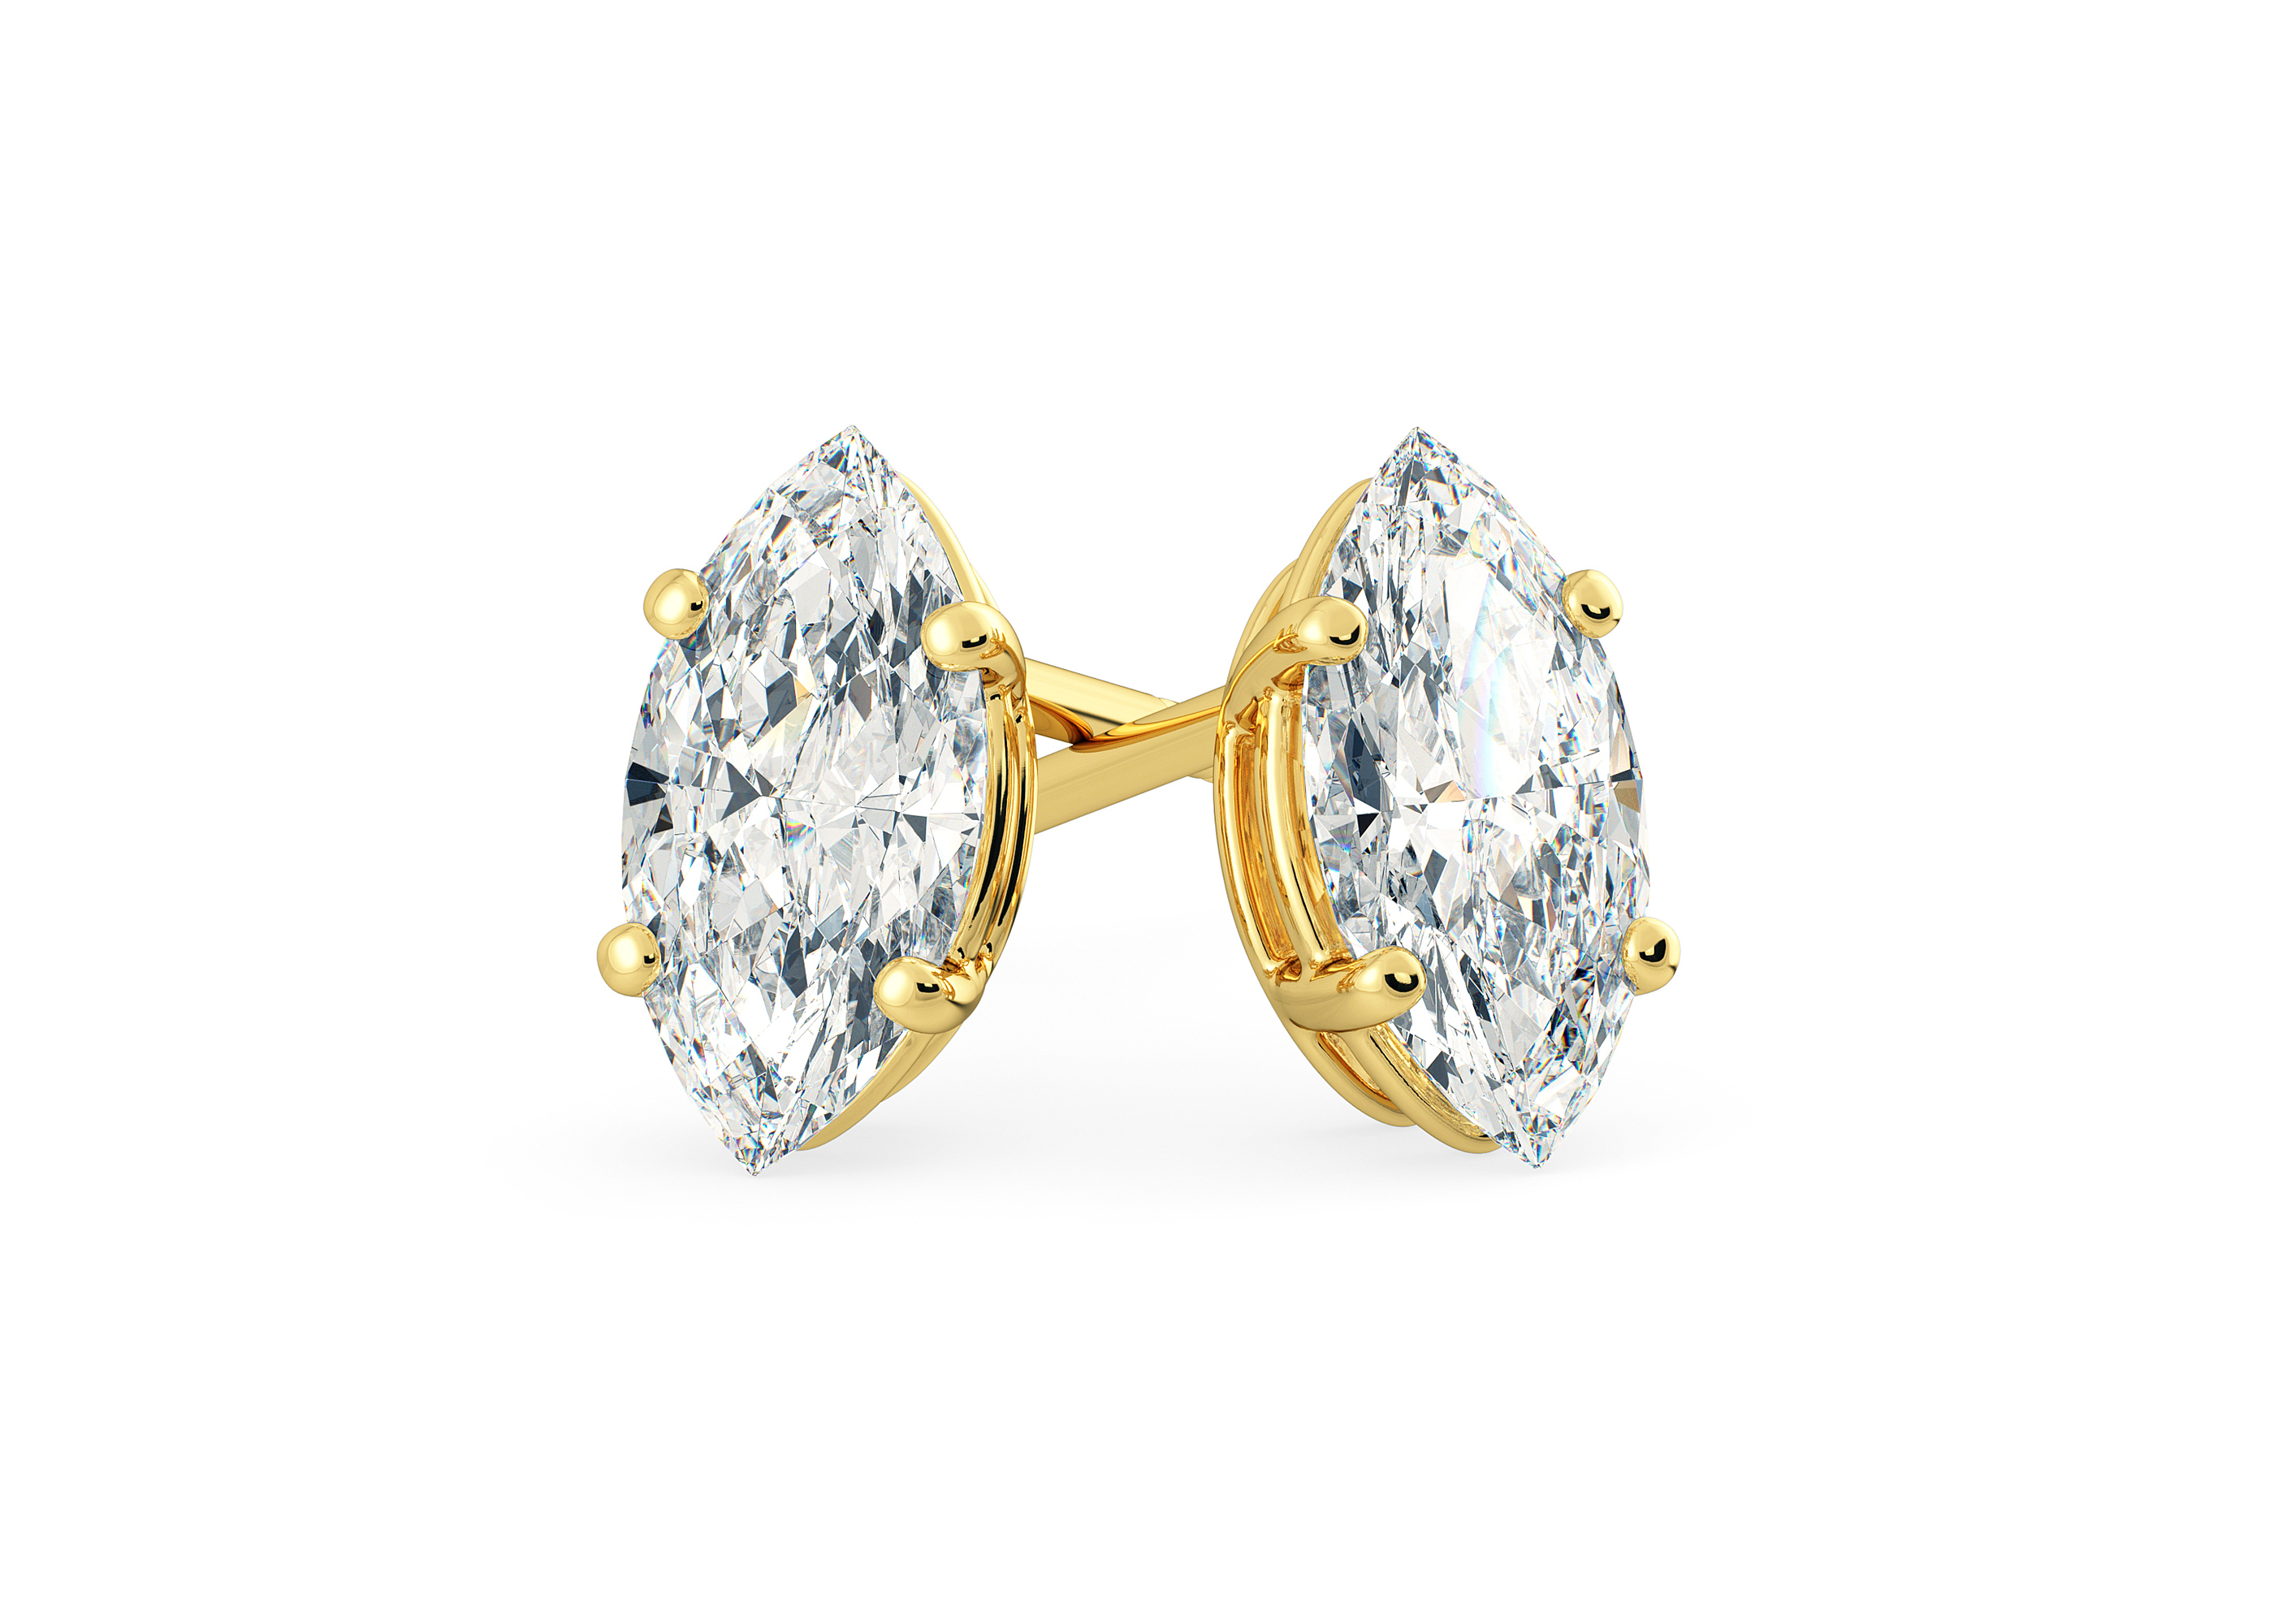 Two Carat Marquise Diamond Stud Earrings in 18K Yellow Gold